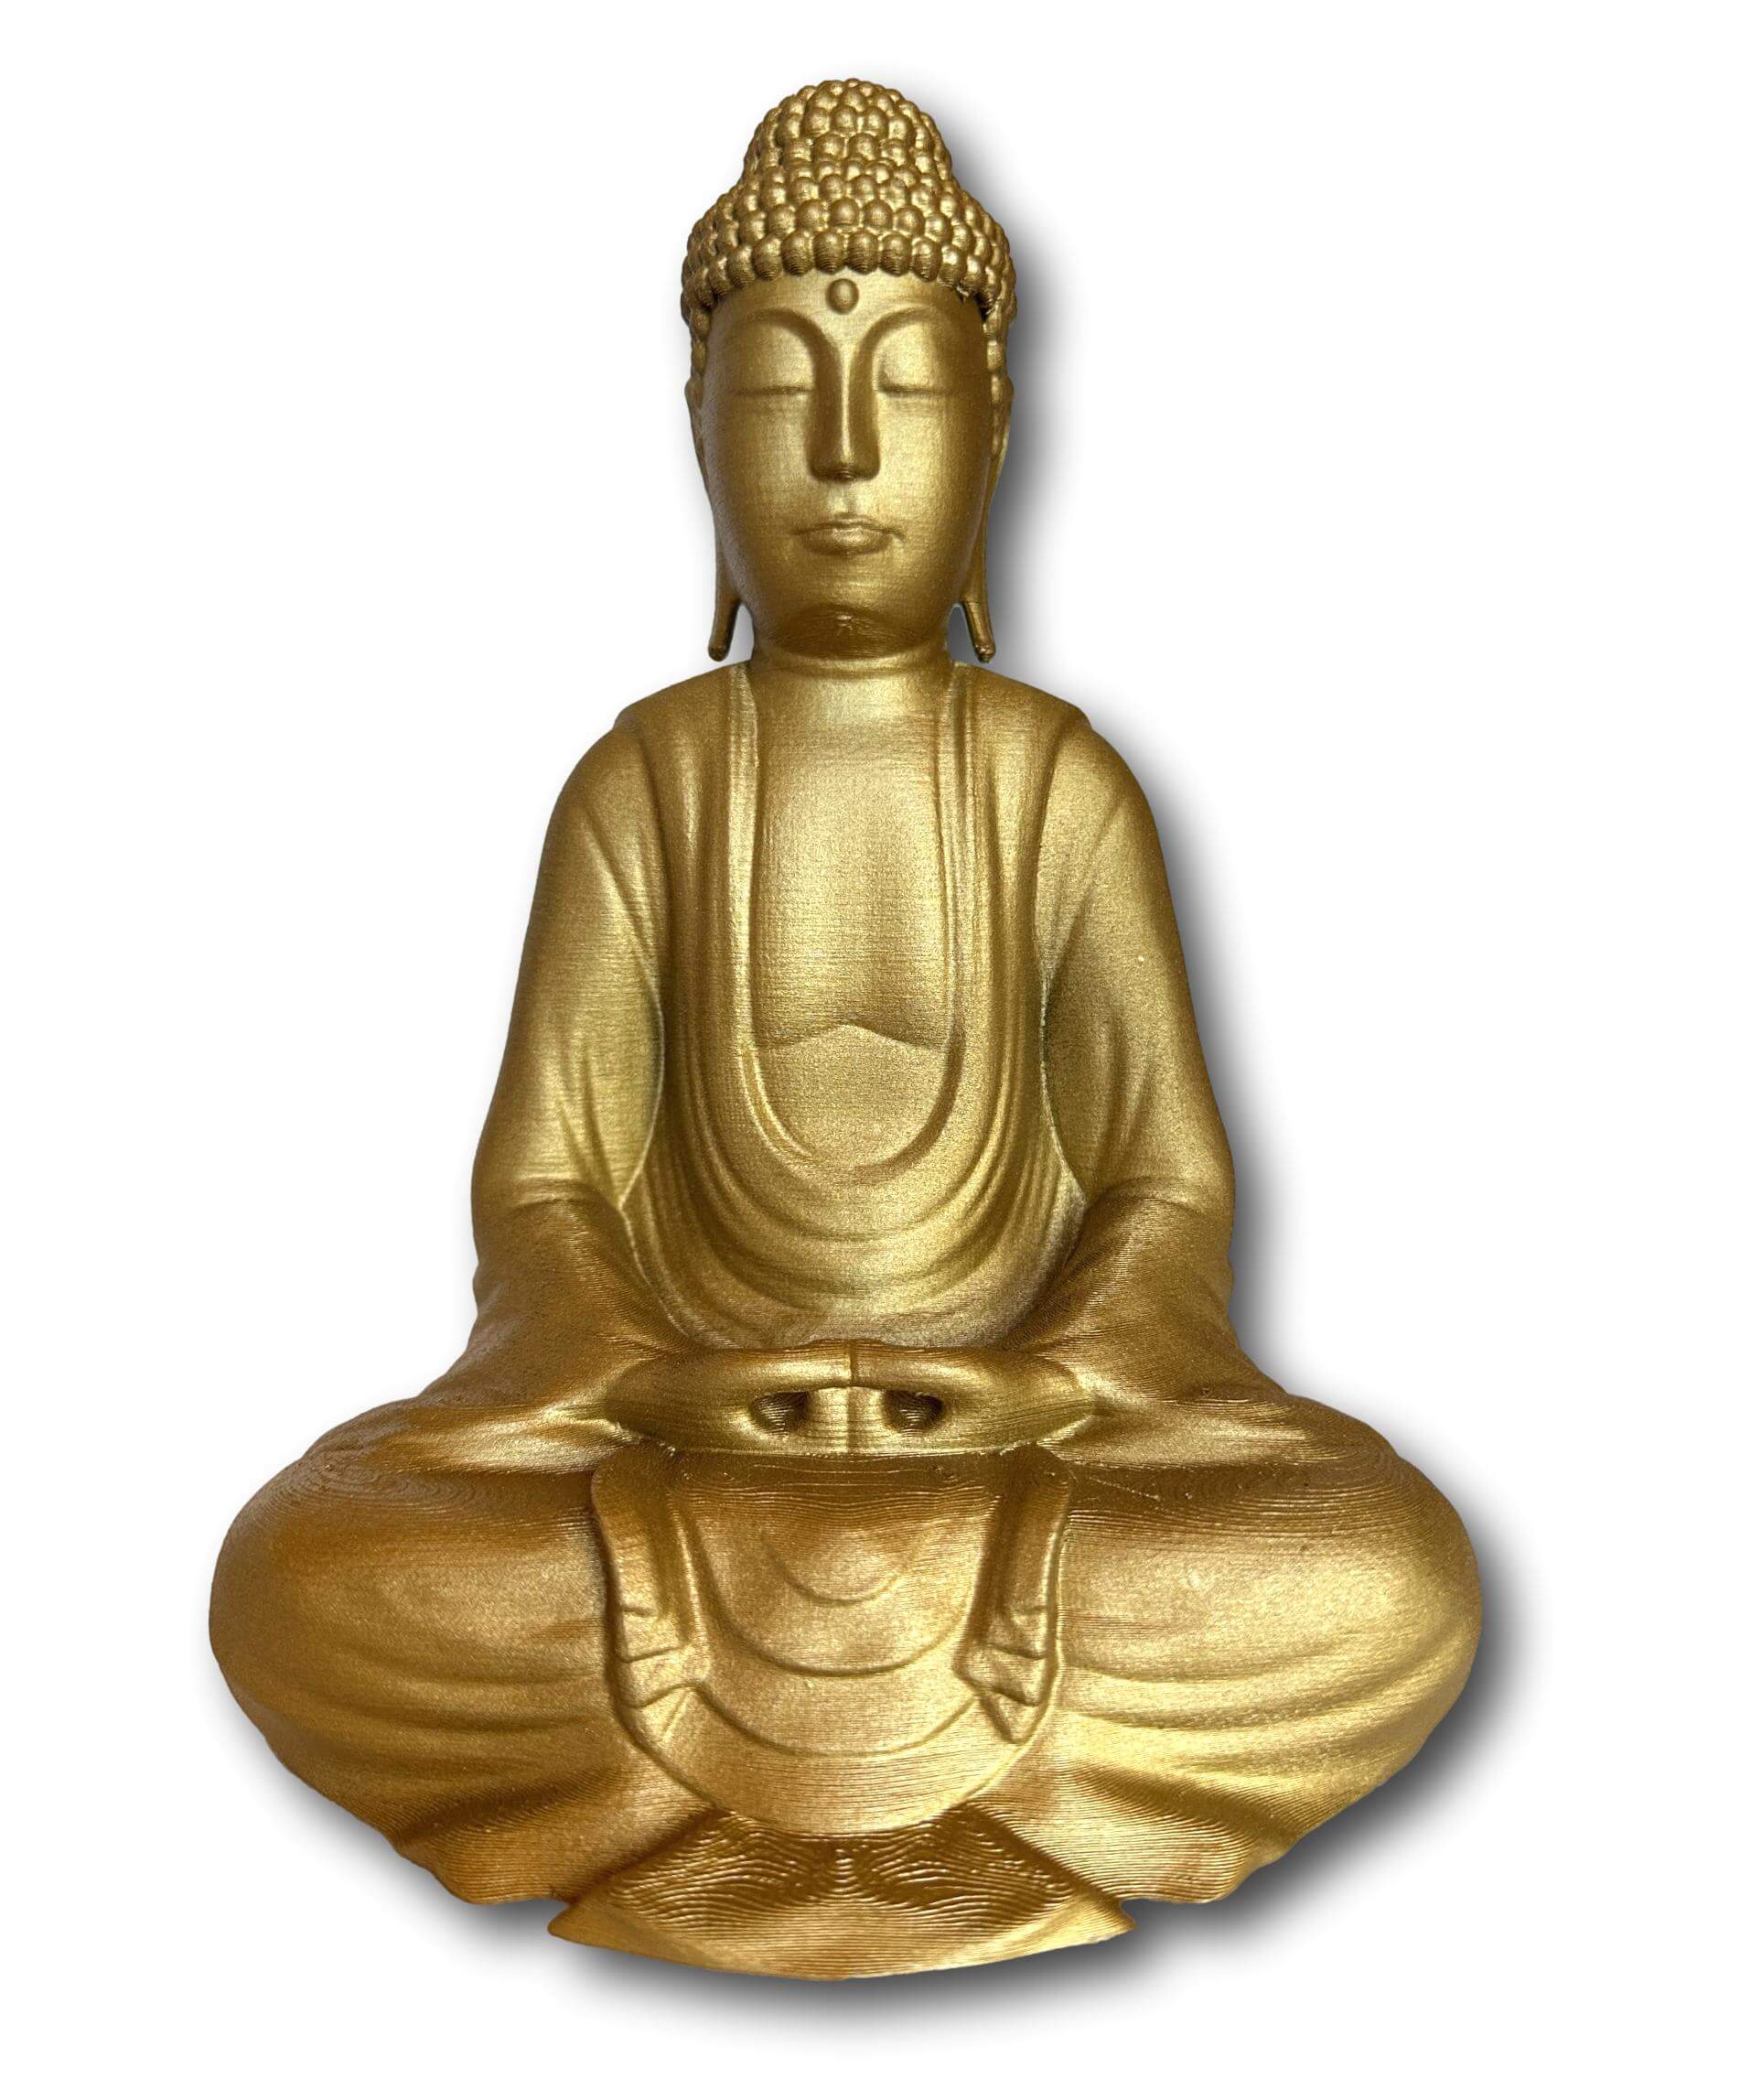 Gold Buddha Statue - - In Handmade Bali Island Buddha Ubud